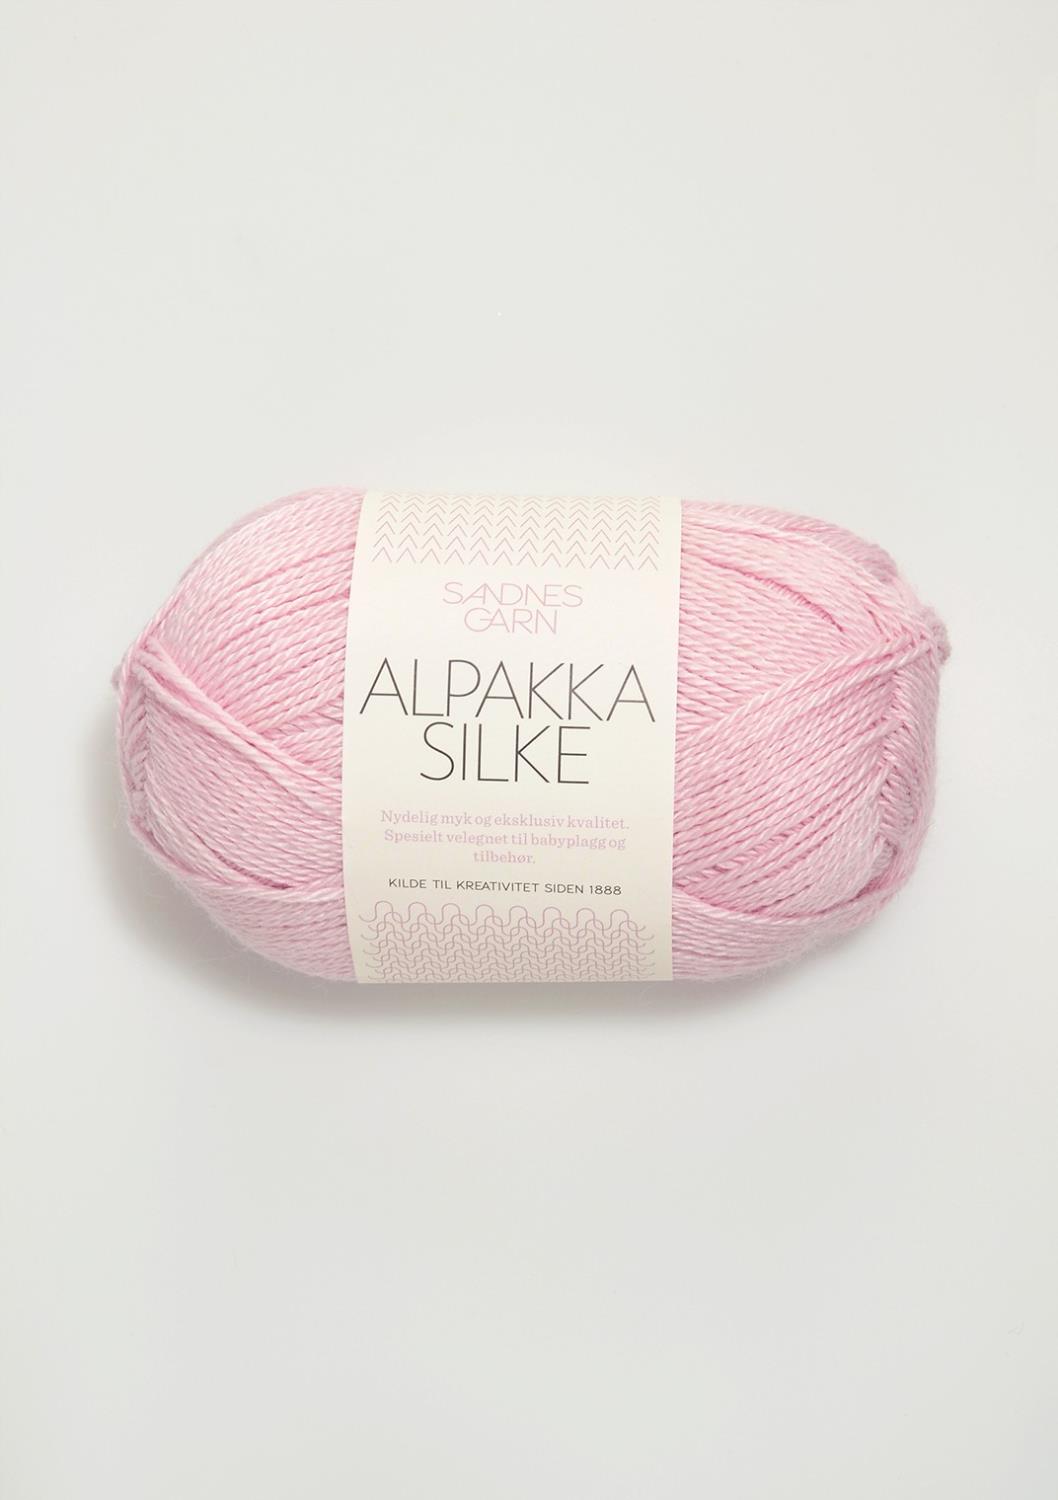 Alpakka Silke Sandnes 3911 - Rosa